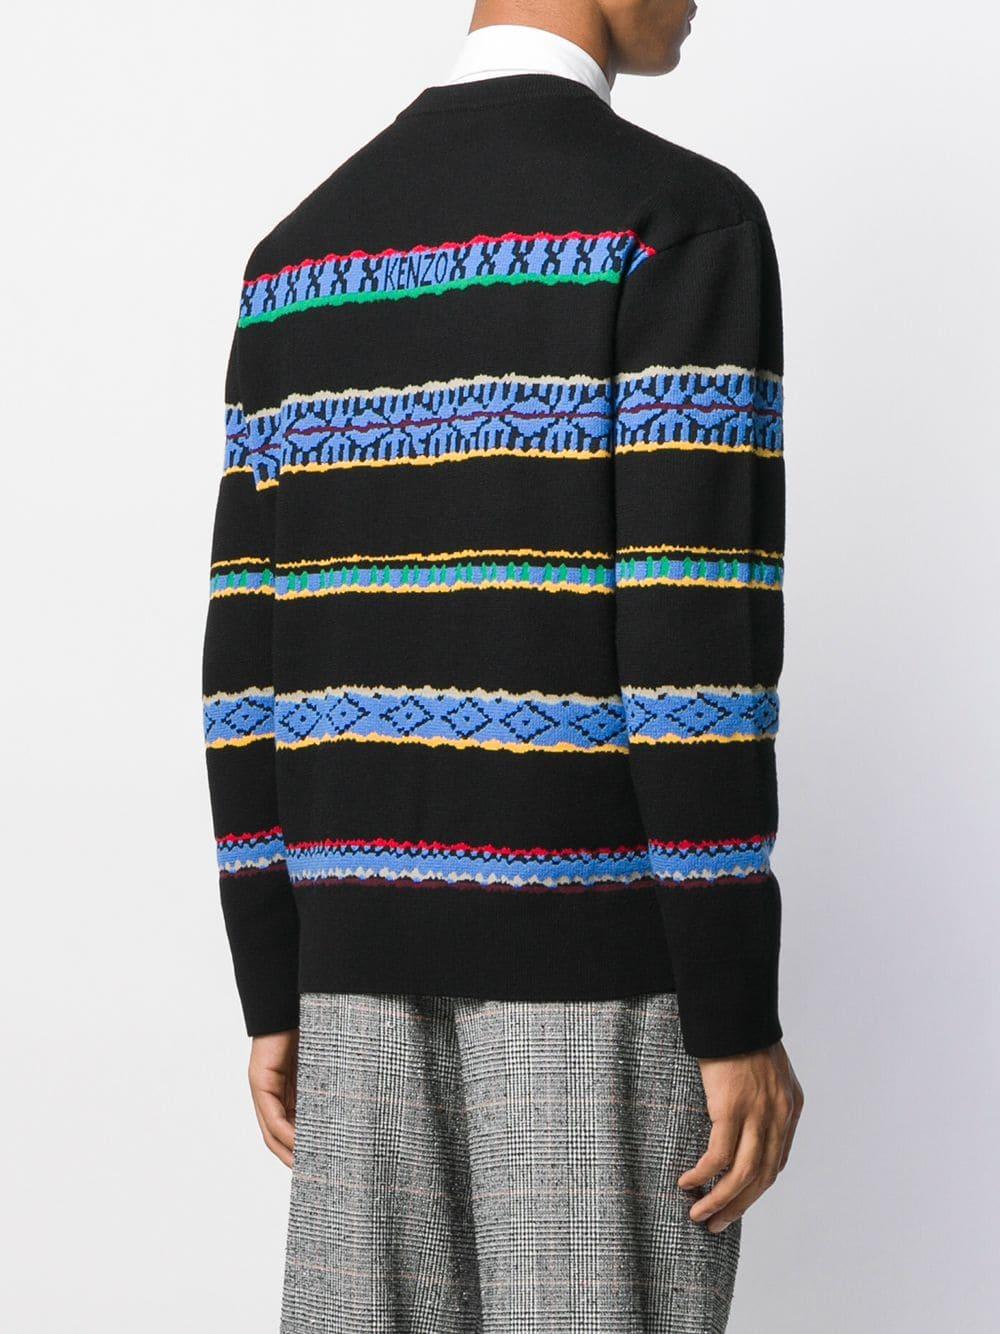 KENZO Wool Peruvian Stripes Crew Neck Sweater in Black for Men - Lyst